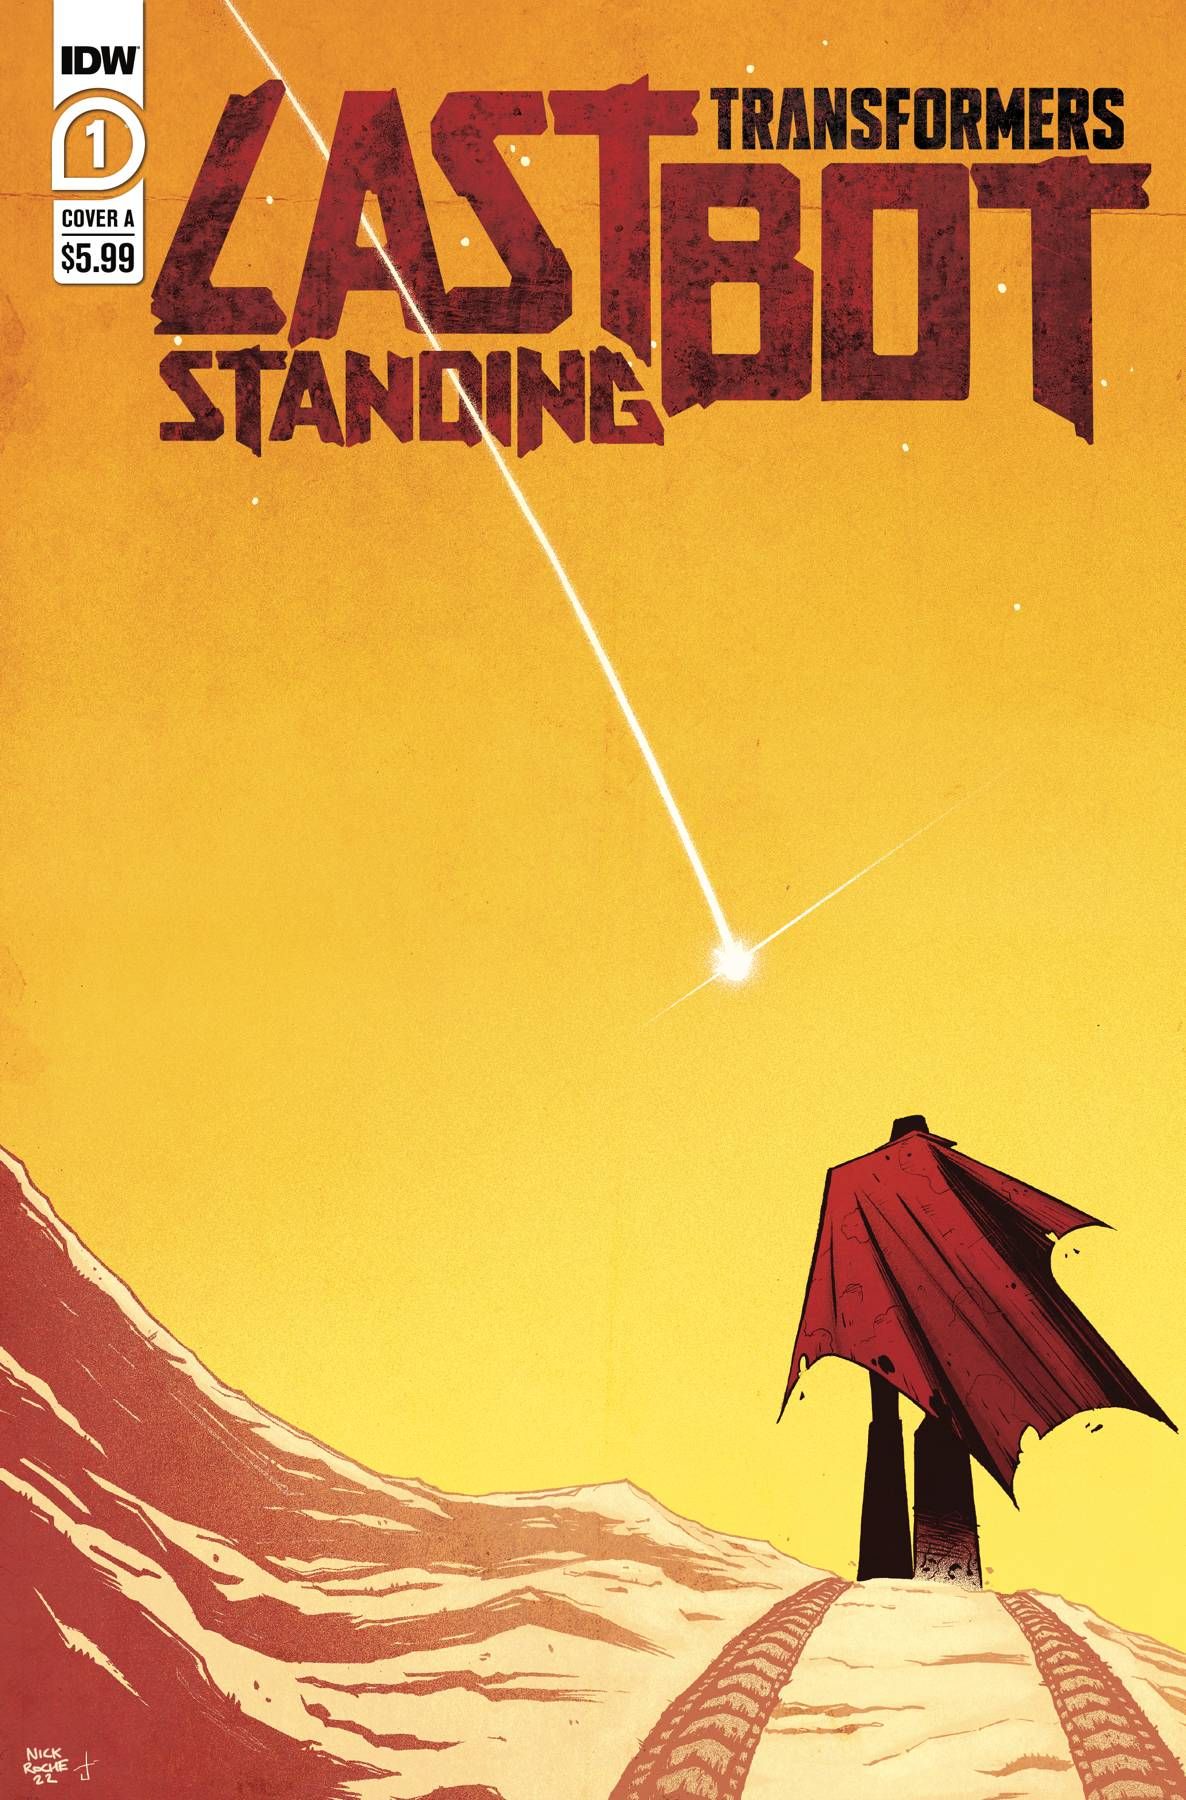 Transformers: Last Bot Standing #1 Comic